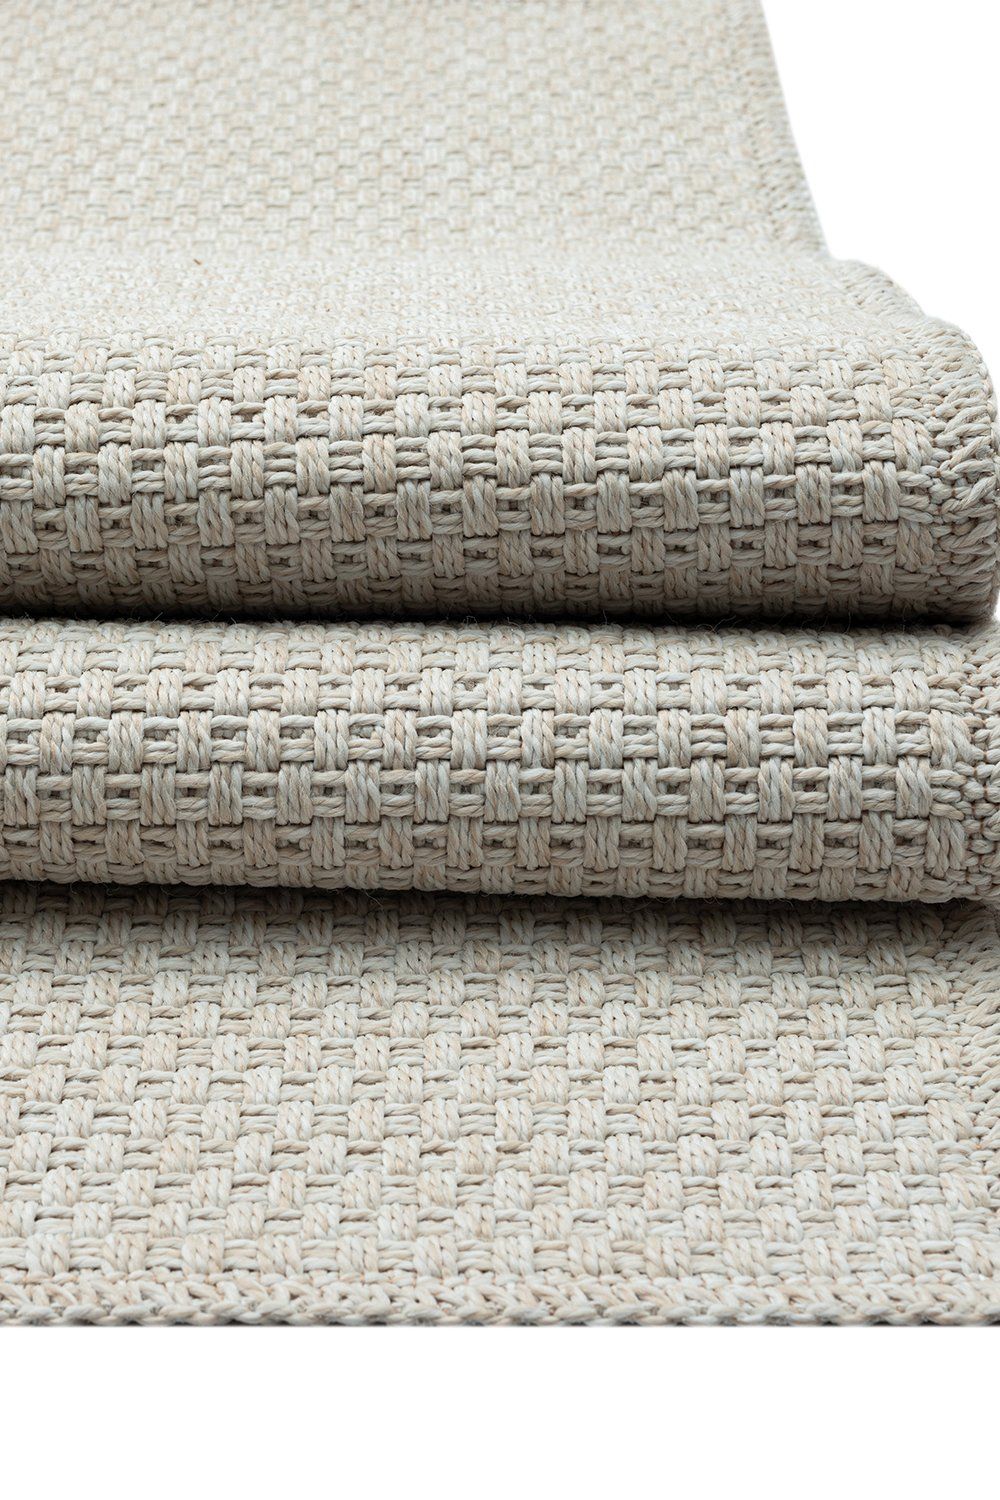 Rusticana 3106 - Carpet (200 x 290)